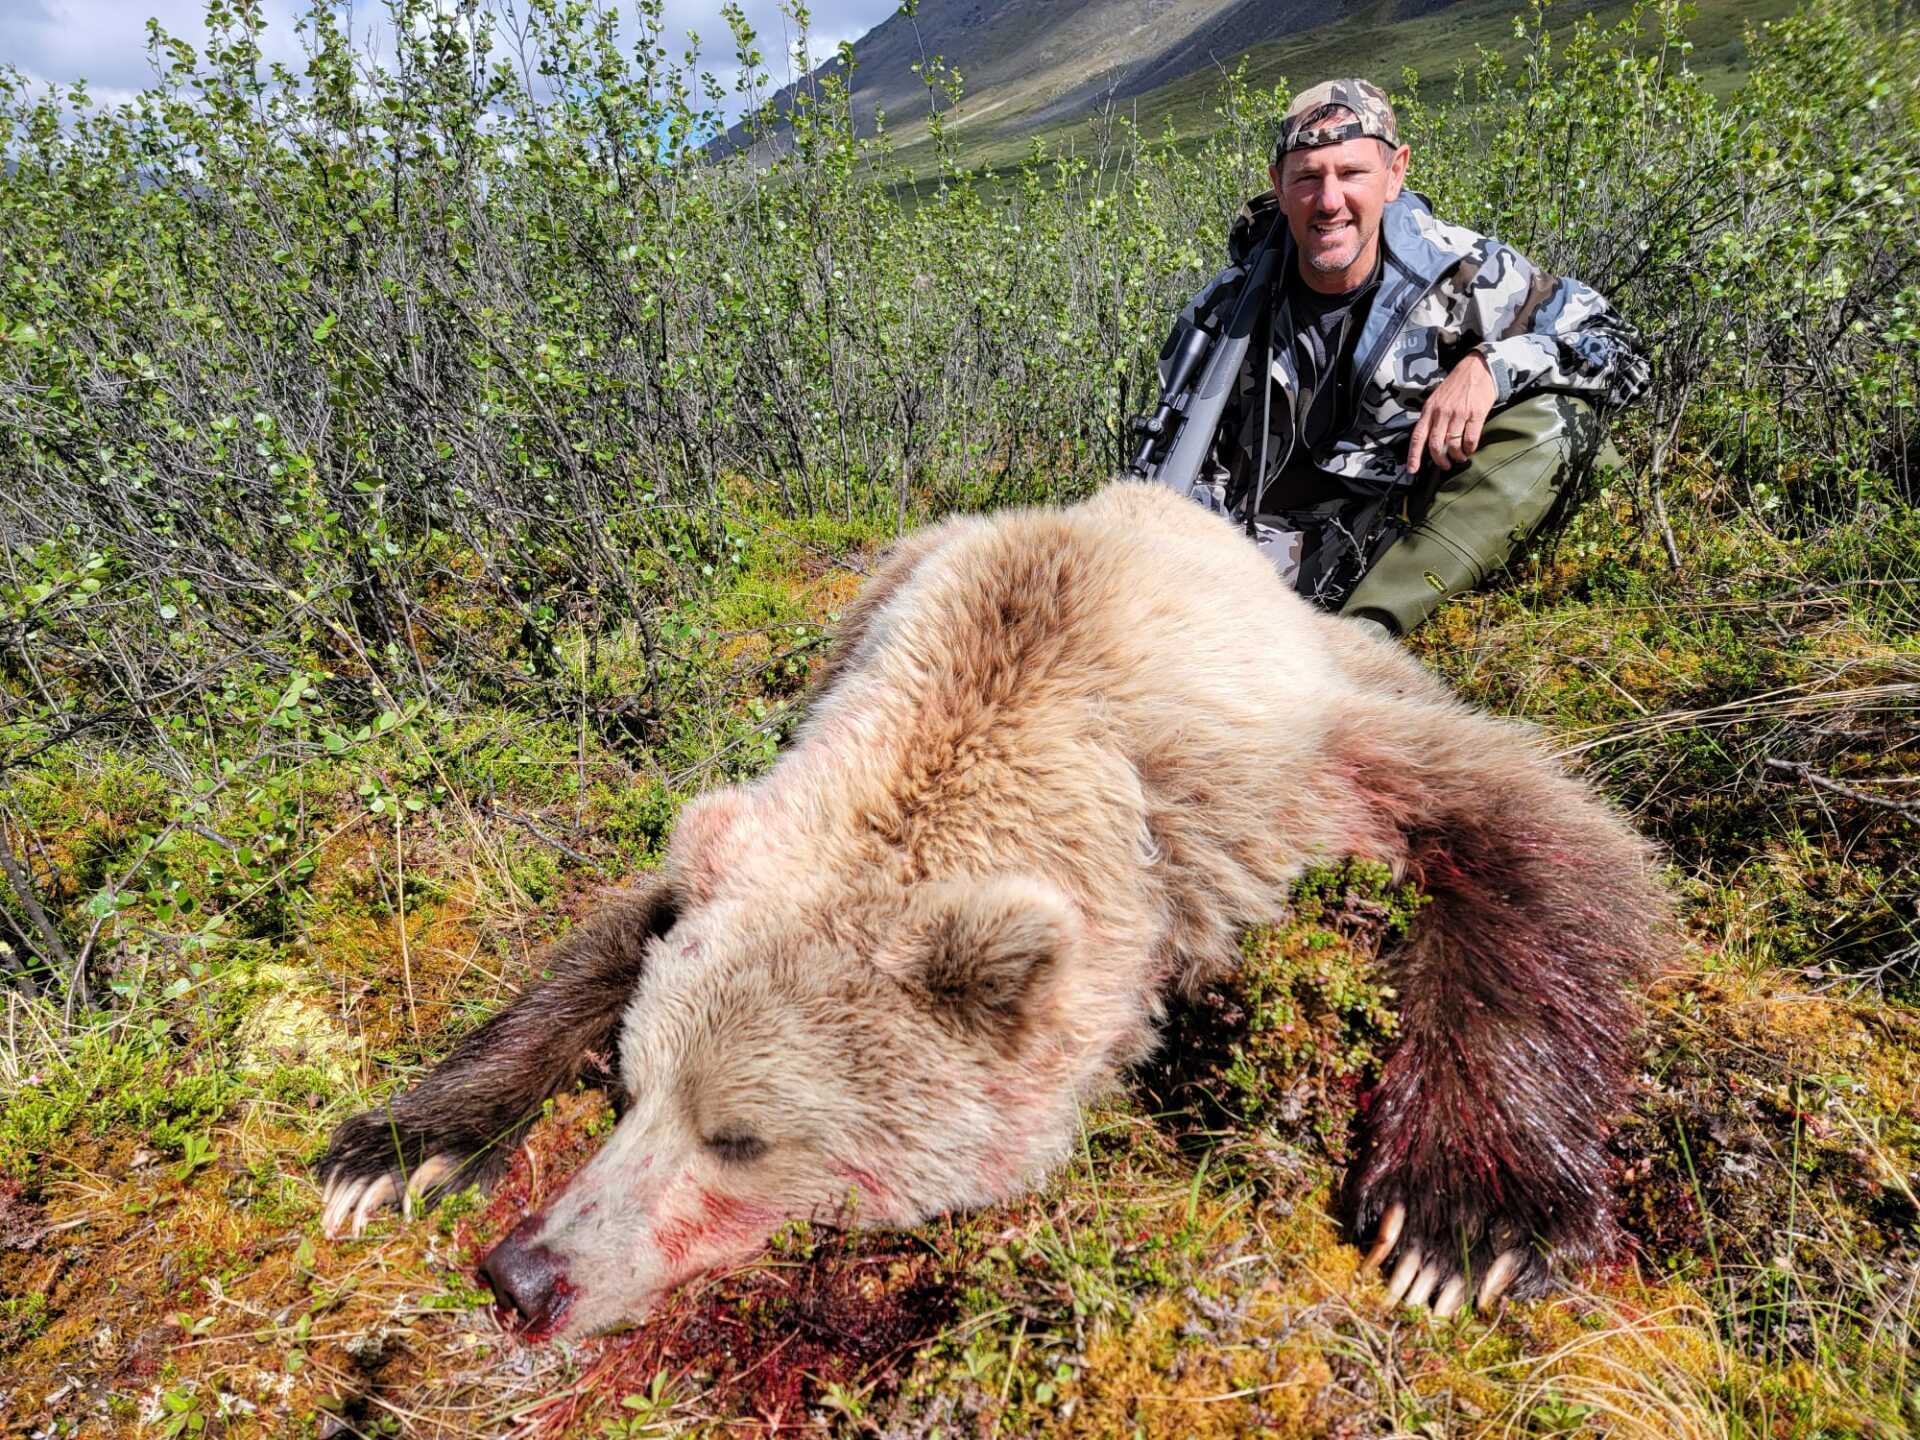 Chugach Mountains and the Talkeetna Mountains, Alaska Mountain Grizzly bear hunting, Alaska mountain grizzly bear hunt